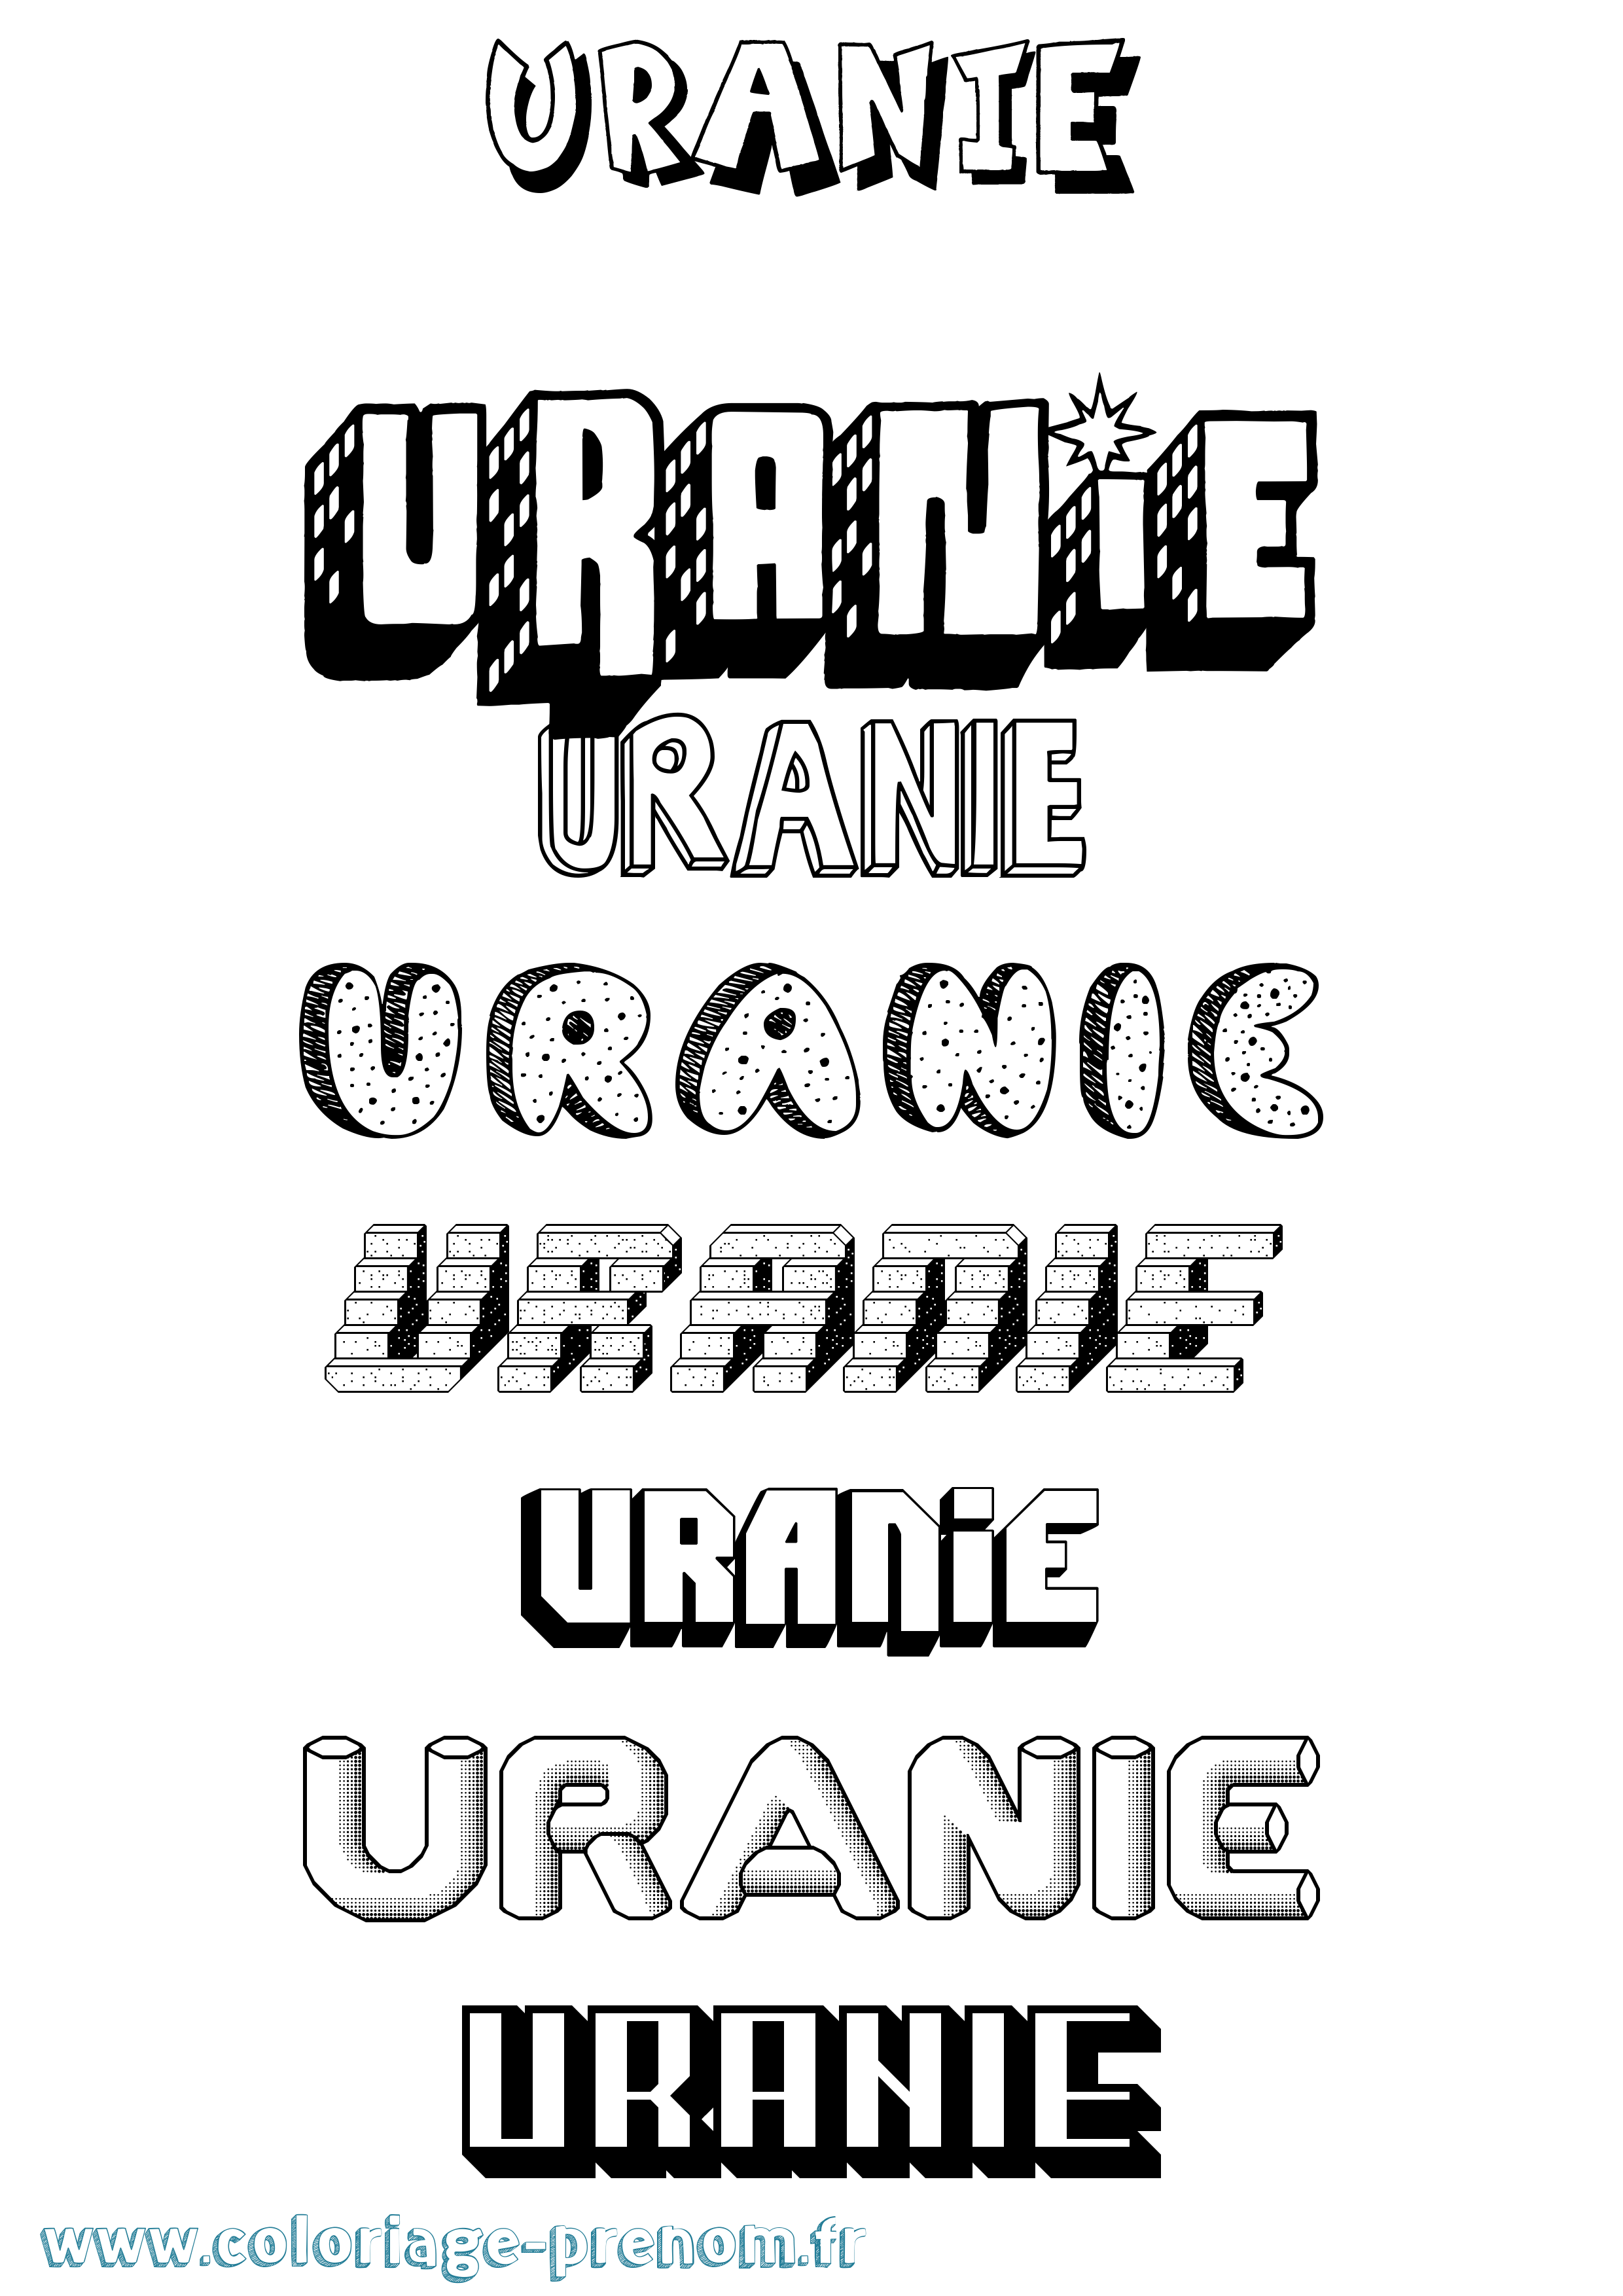 Coloriage prénom Uranie Effet 3D